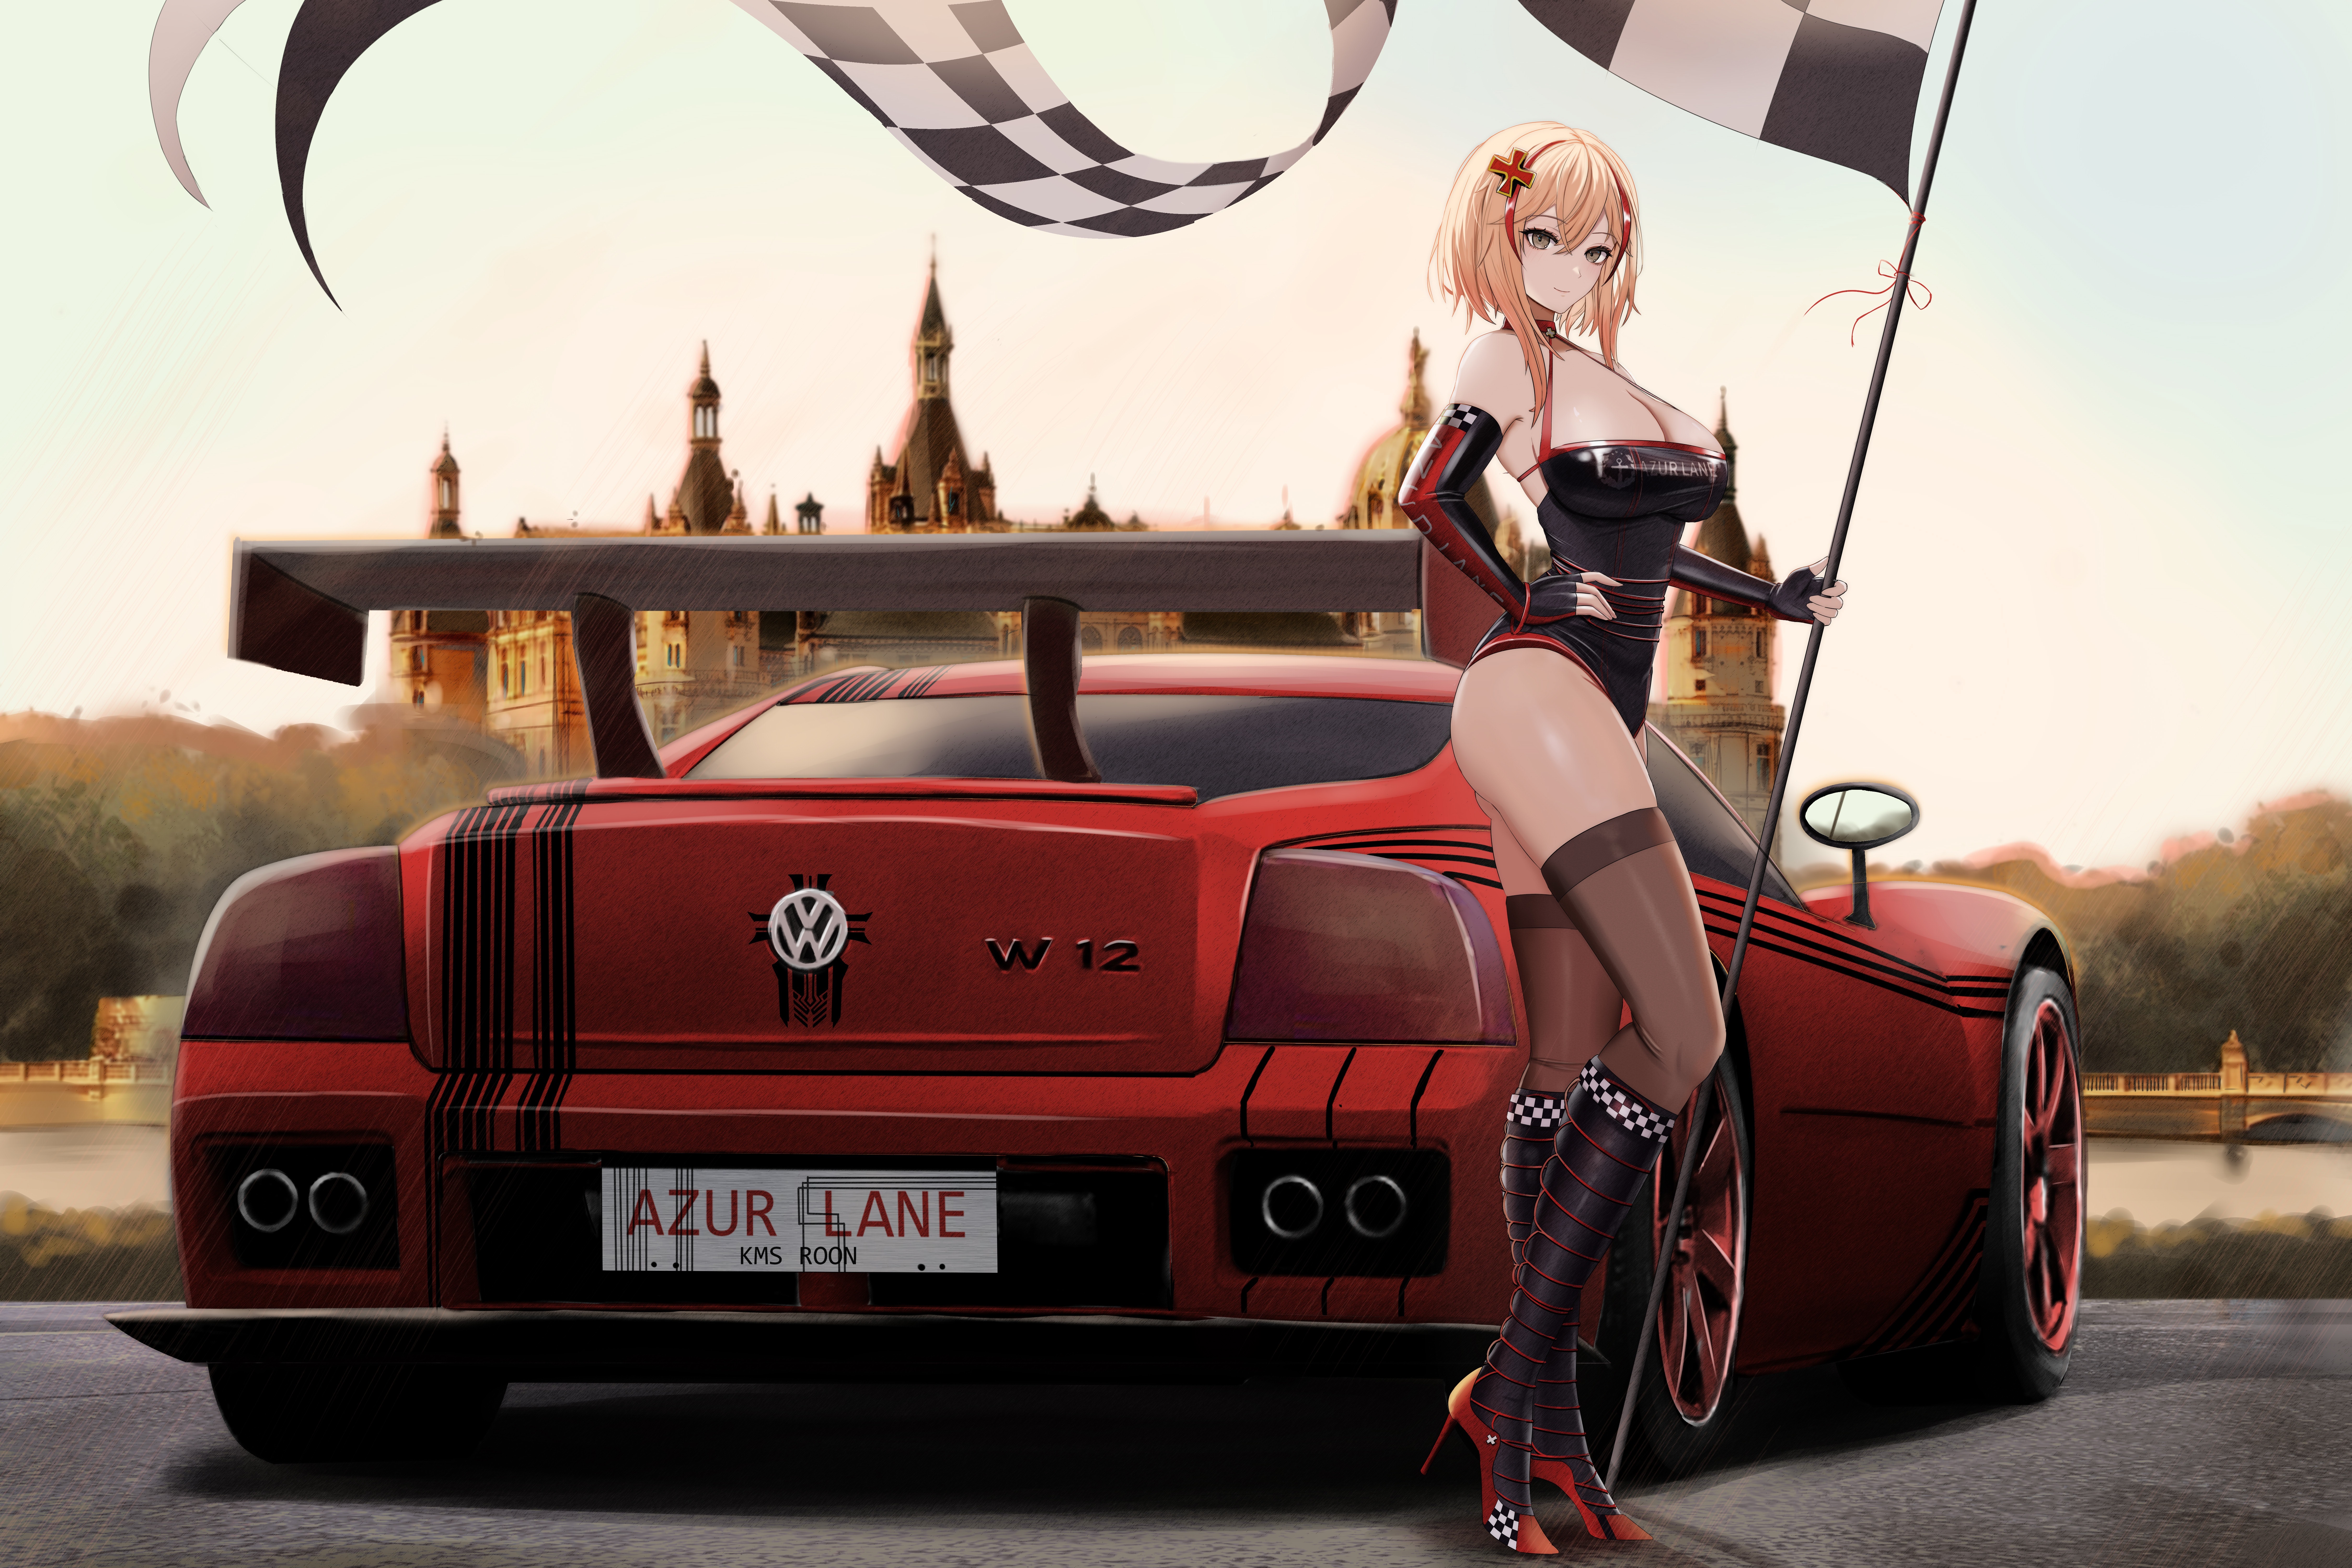 Anime 9000x6000 anime anime girls car race flag stockings heels elbow gloves big boobs Volkswagen Volkswagen W12 Azur Lane